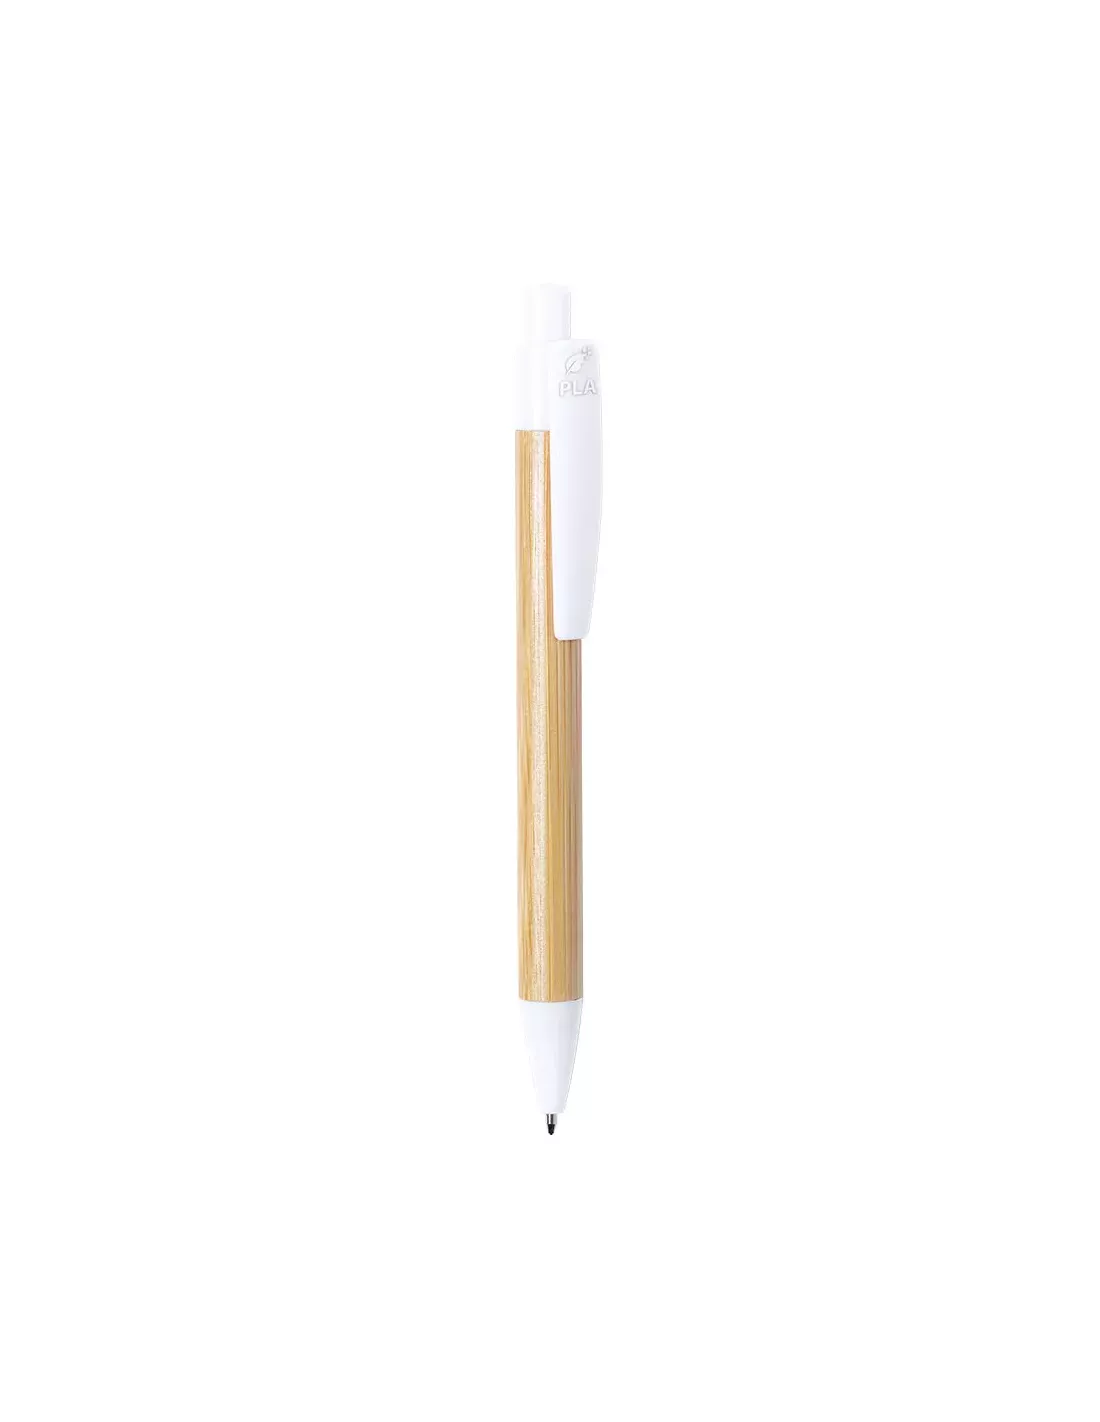 Bolígrafo de bambú Heloix